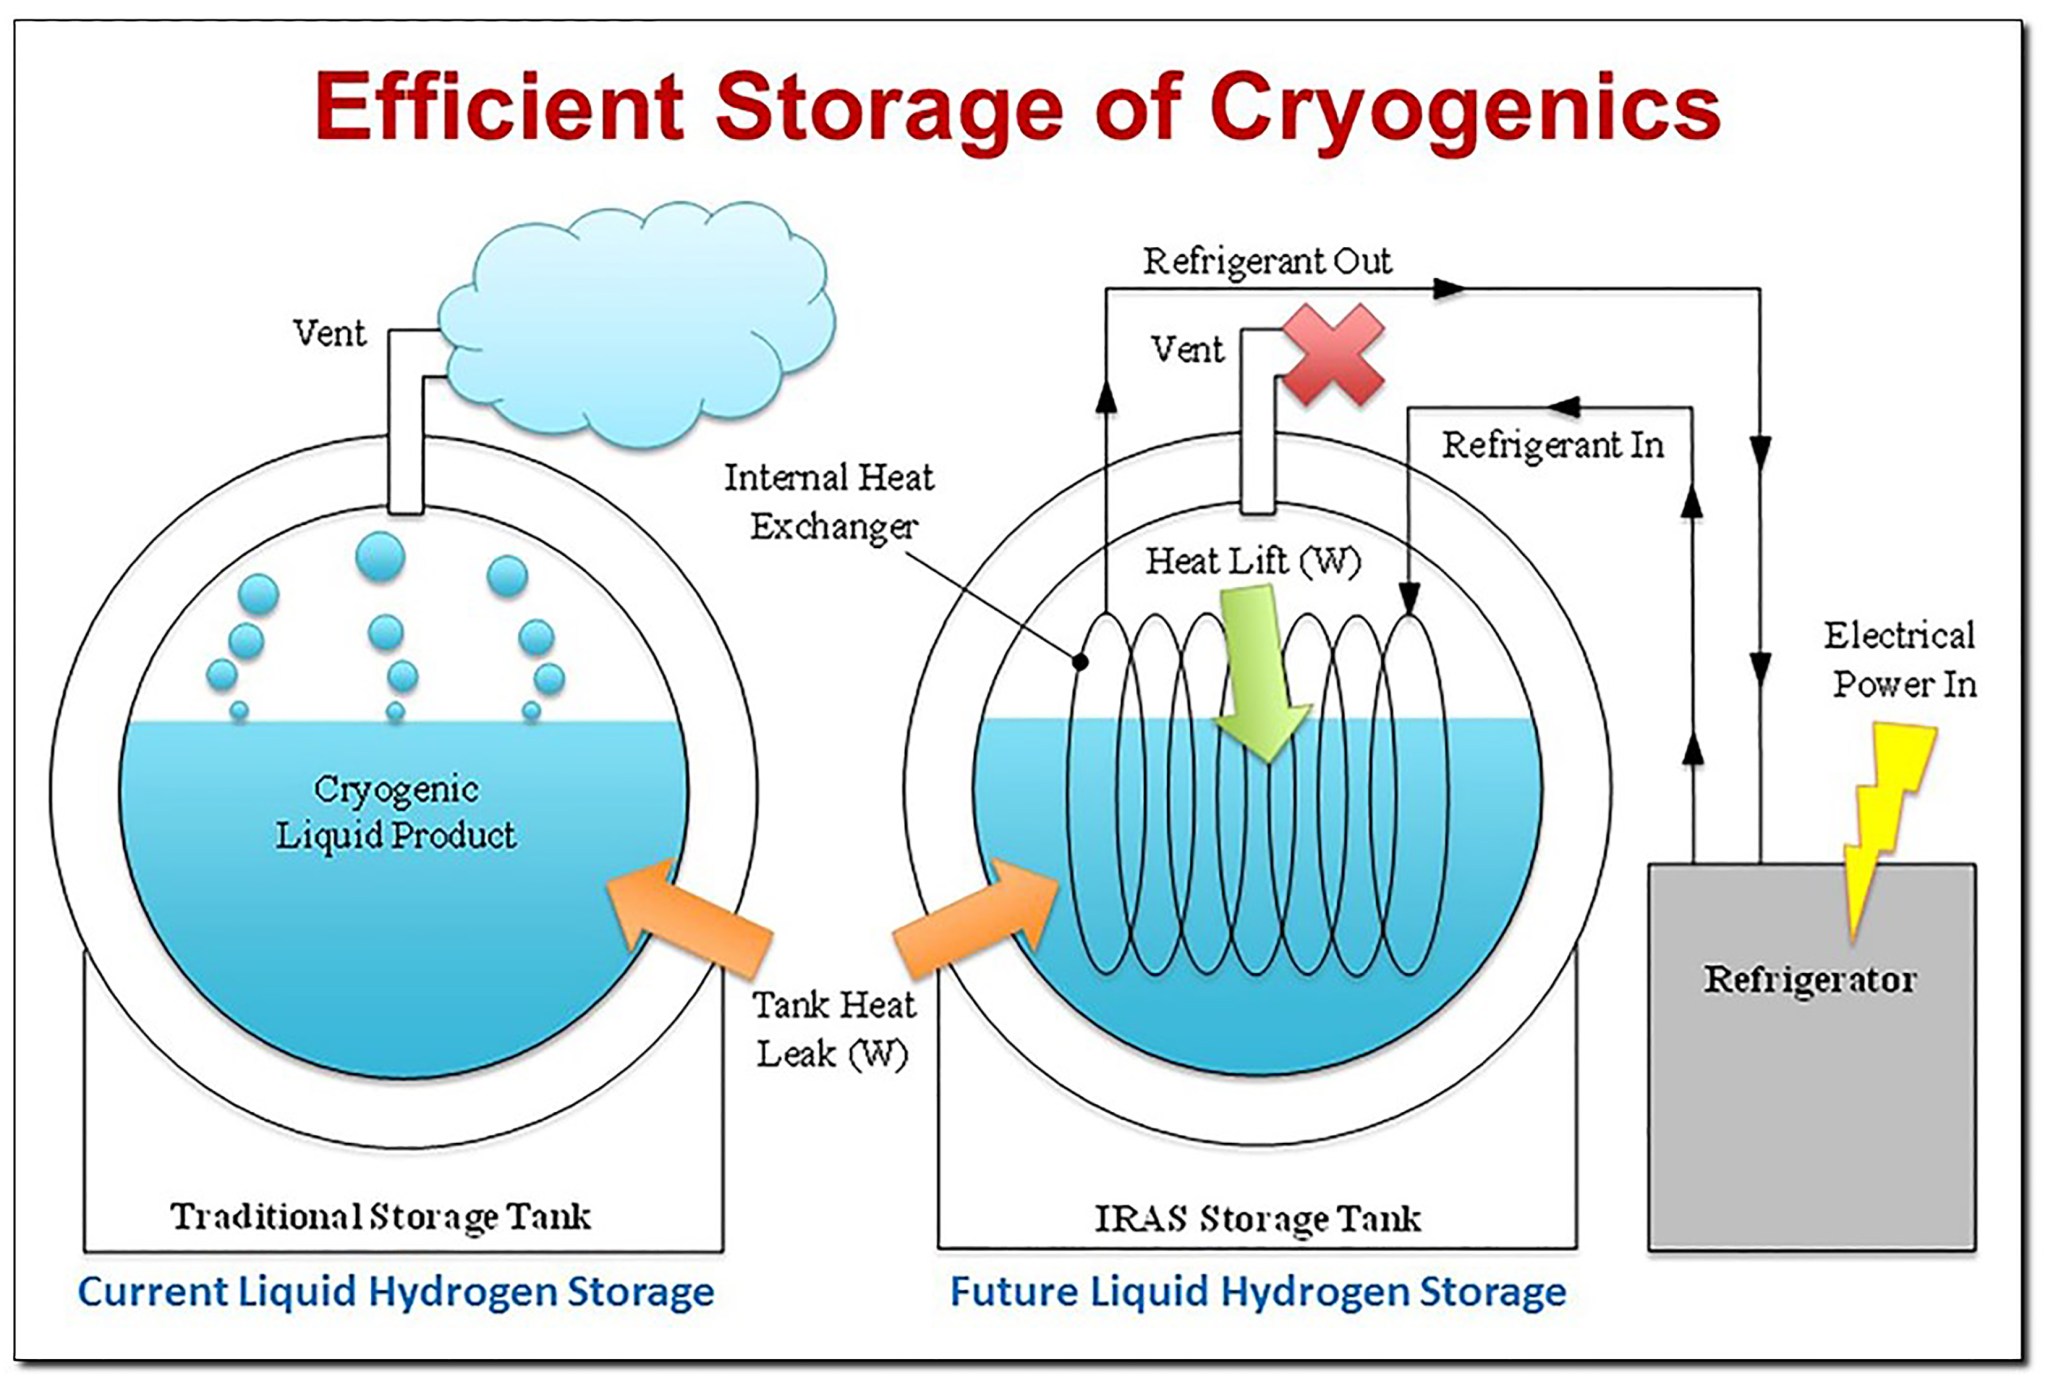 Efficient Storage of Cryogenics